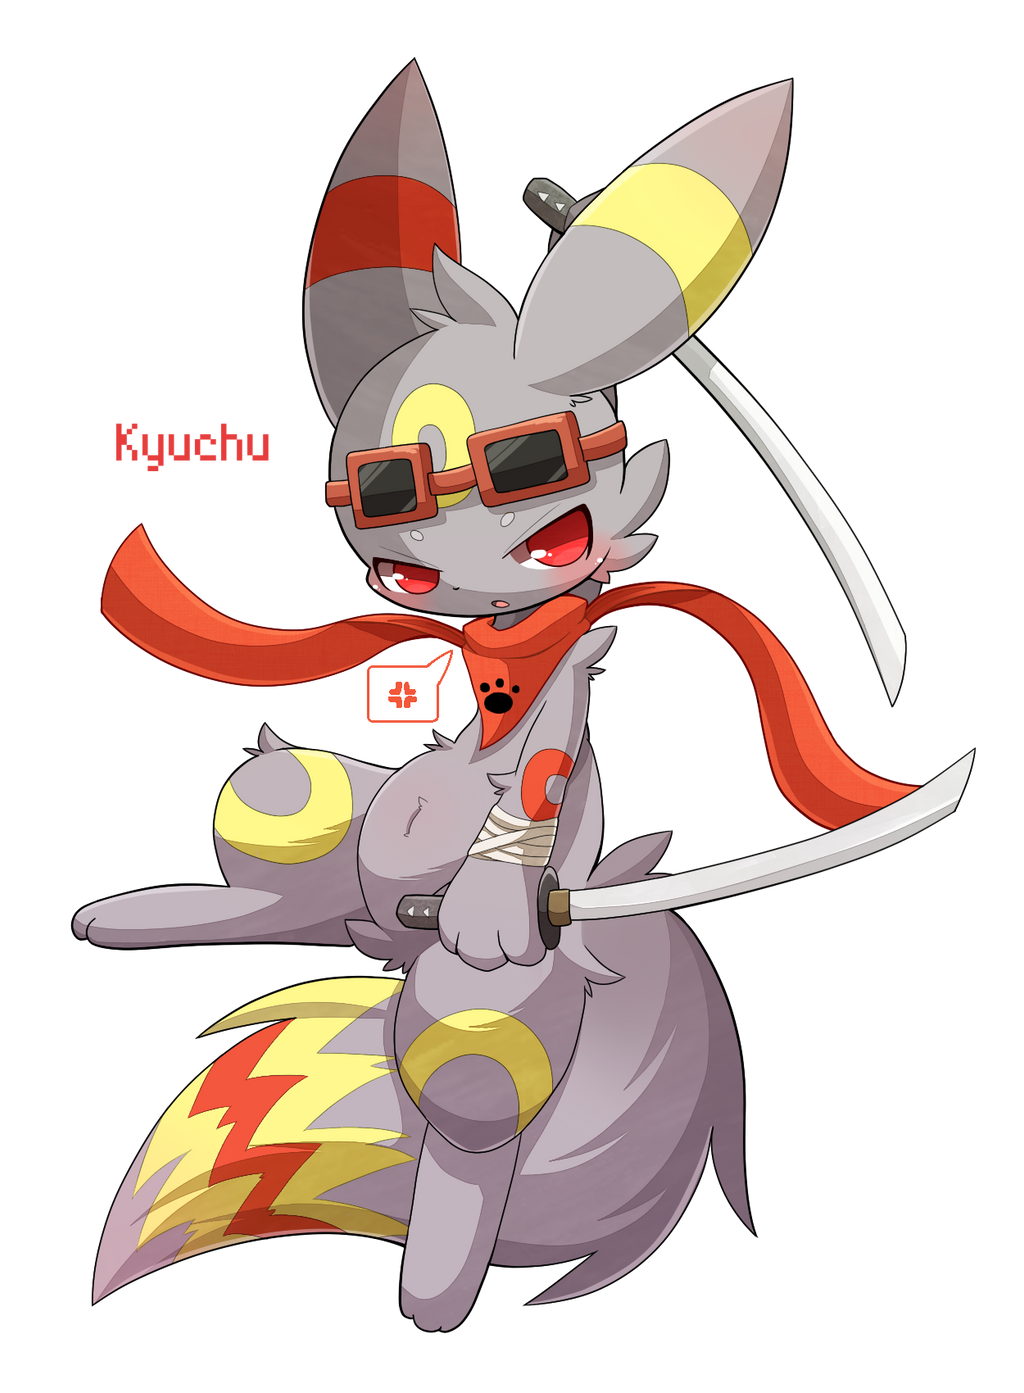 Kyuchu - Ninjachu95